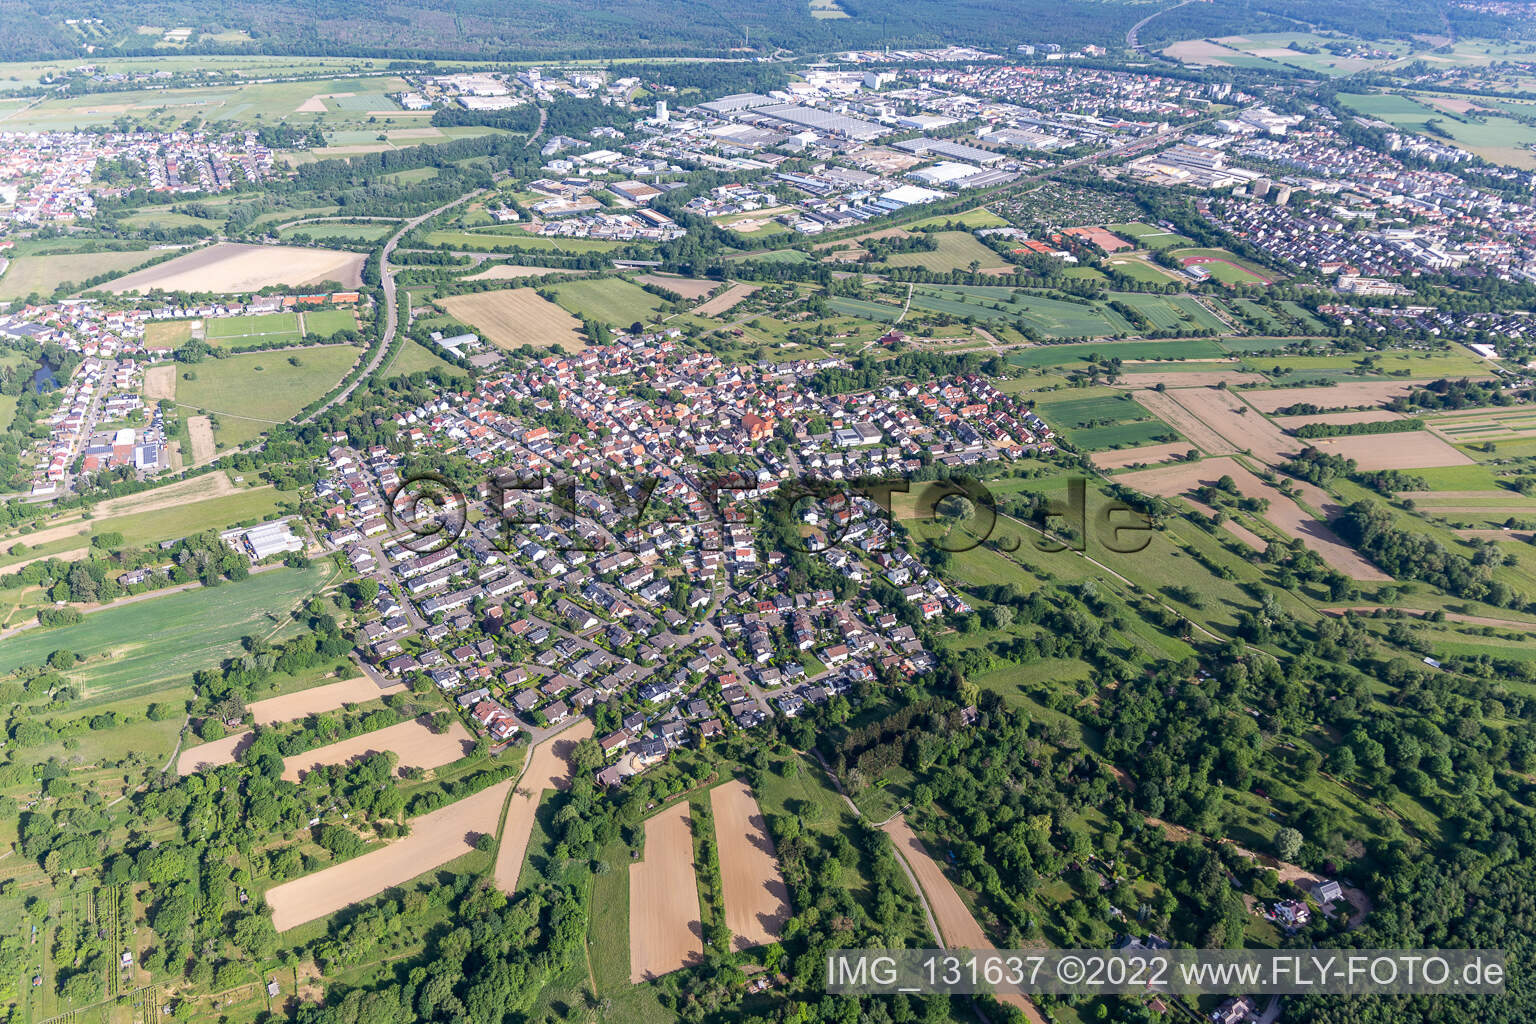 Aerial photograpy of District Ettlingenweier in Ettlingen in the state Baden-Wuerttemberg, Germany